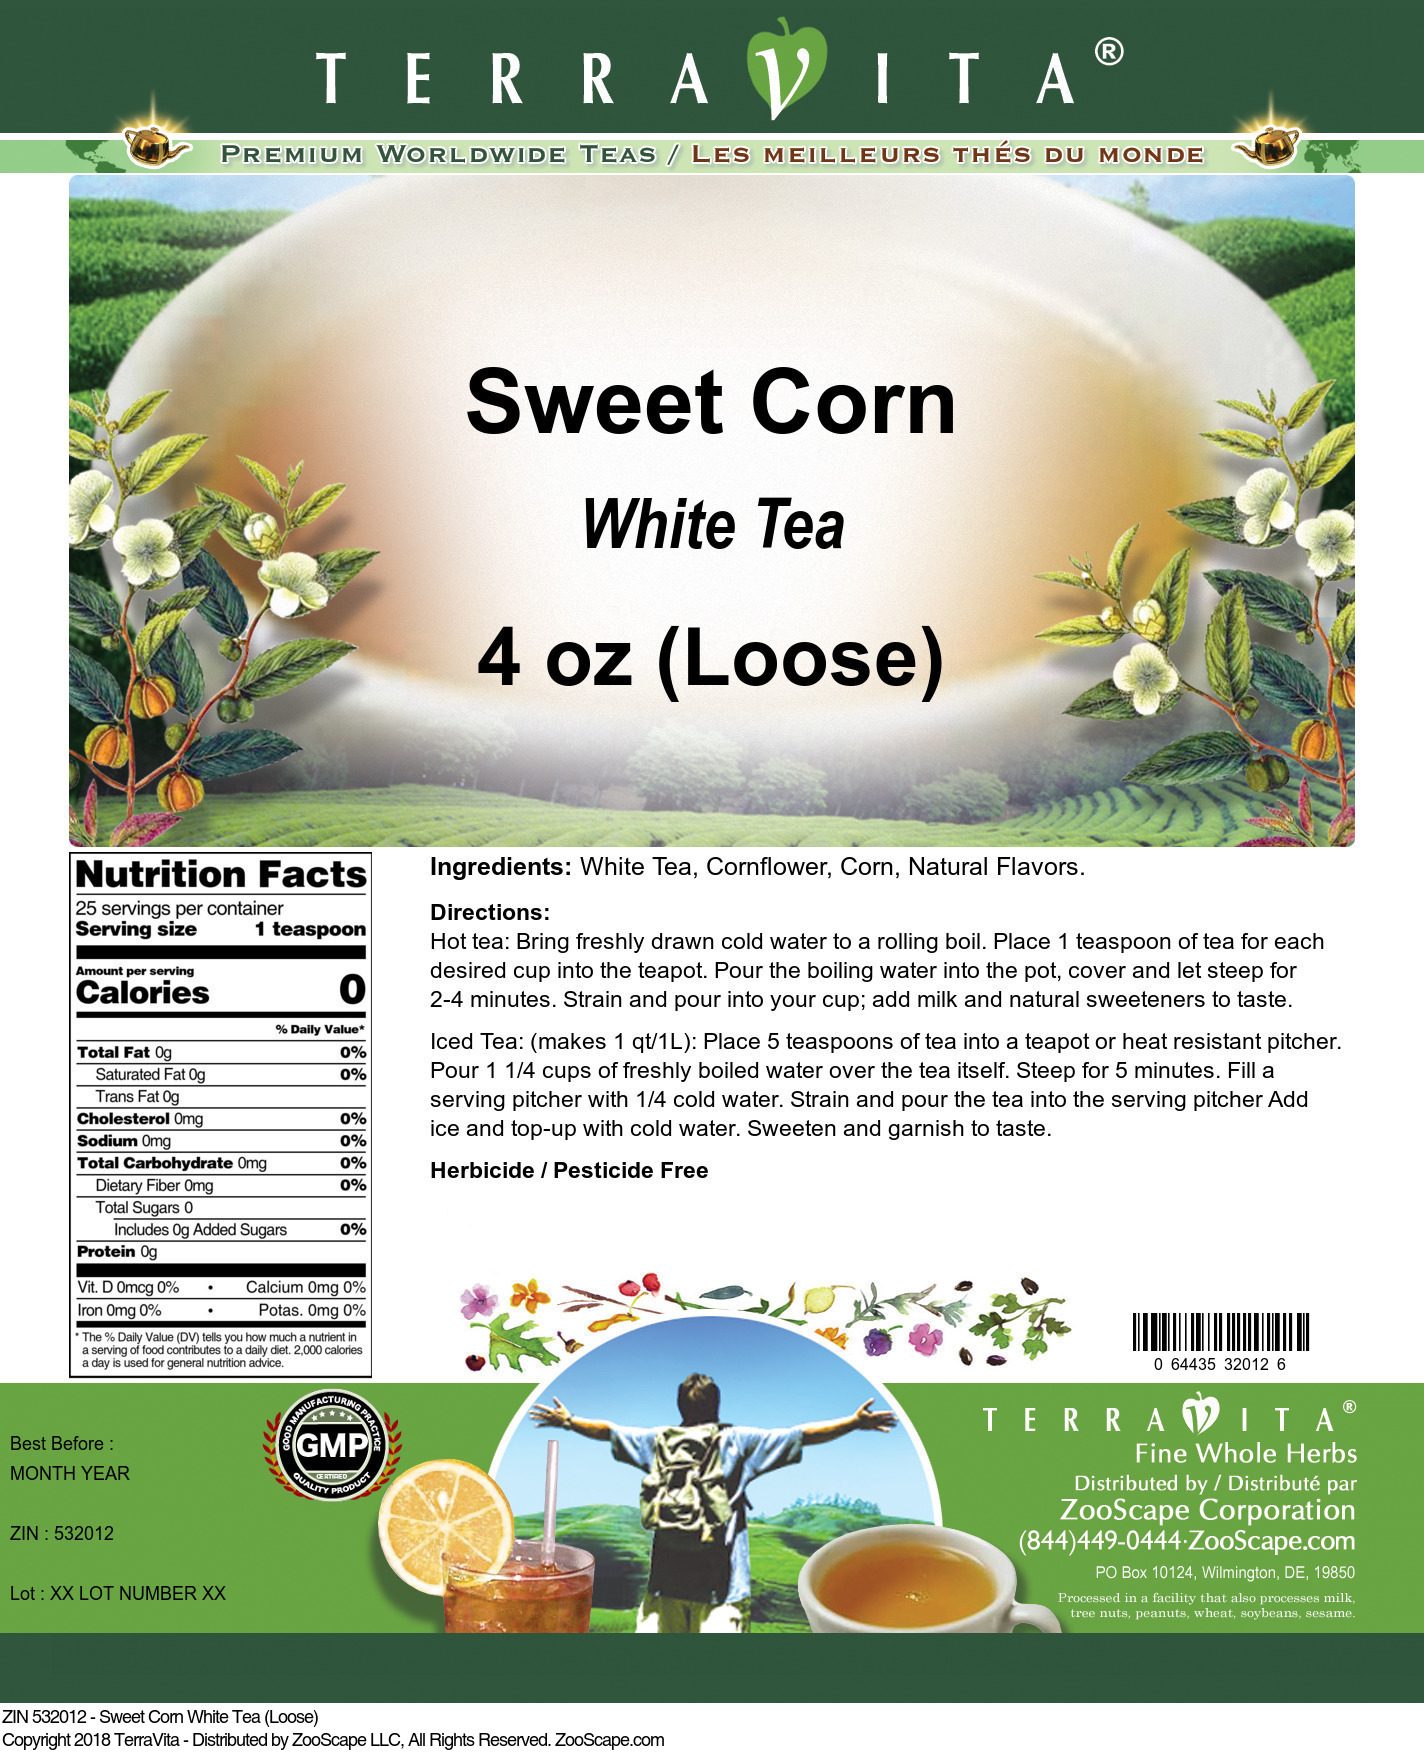 Sweet Corn White Tea (Loose) - Label